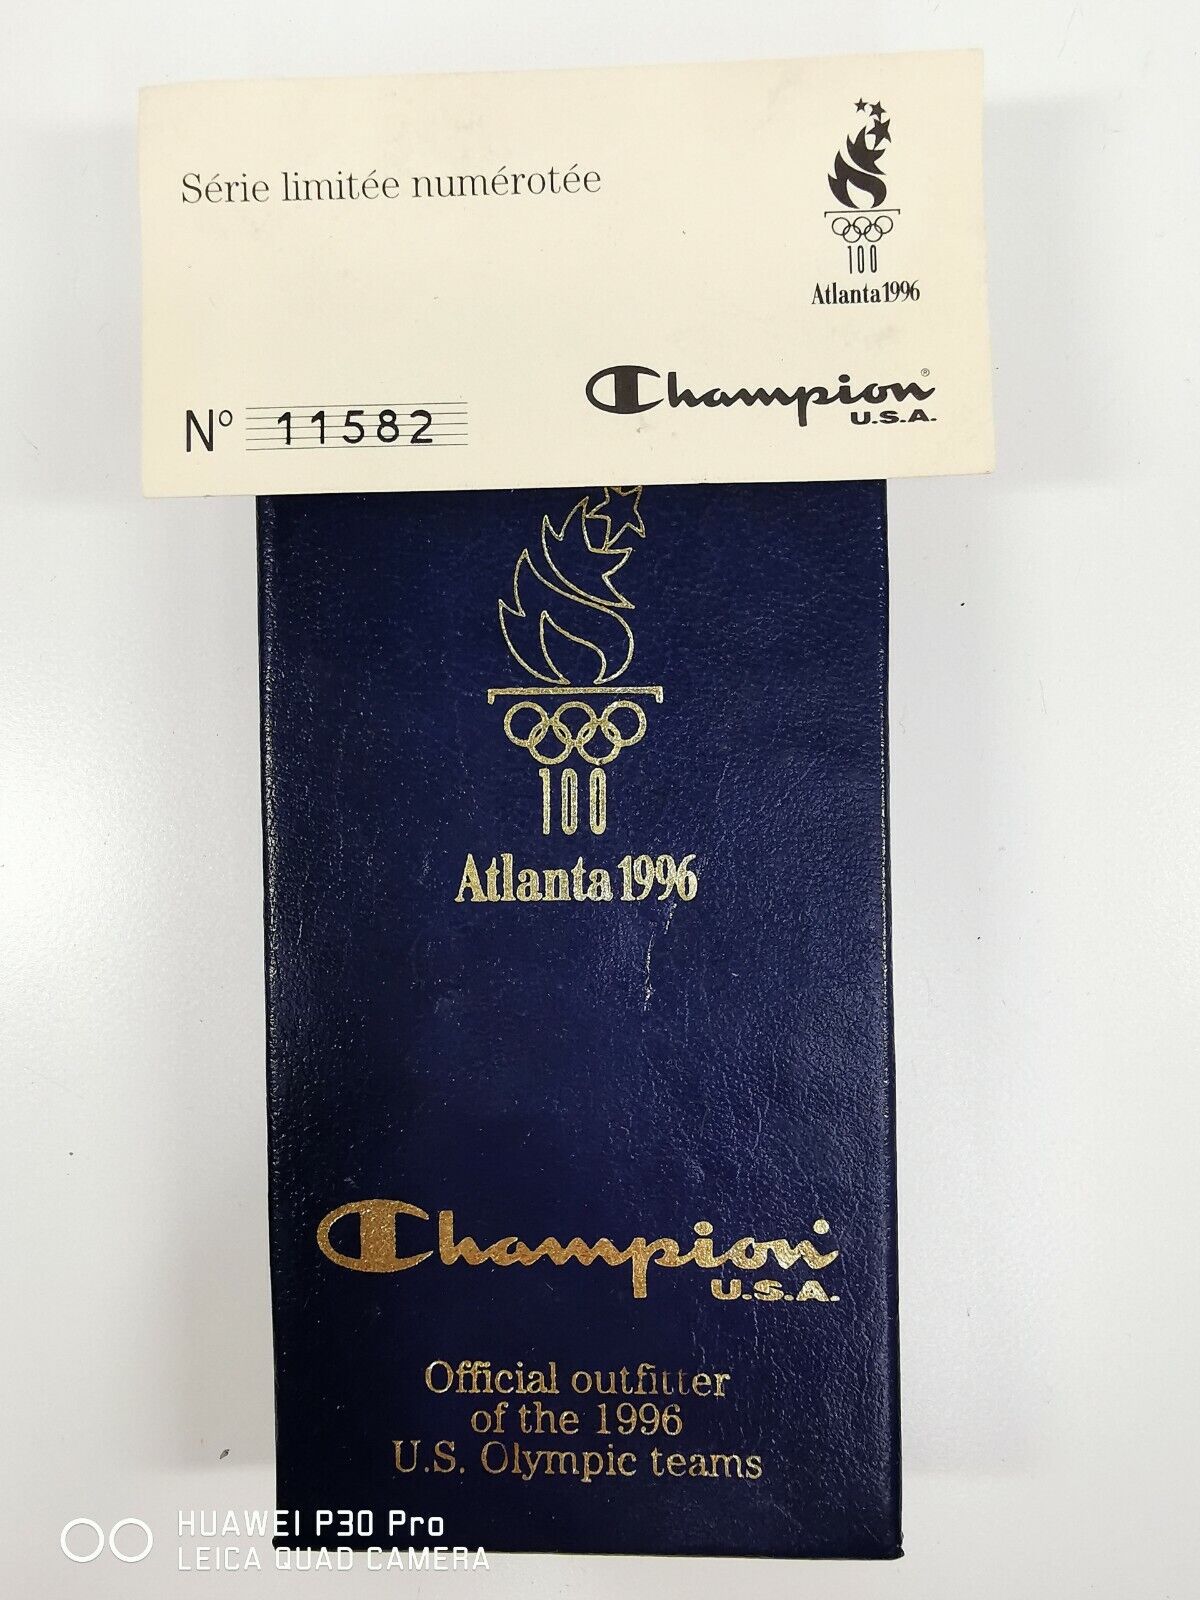 1996 JO ATLANTA 2 PIN BOX - CHAMPION USA OFFICIAL OUTFITTER